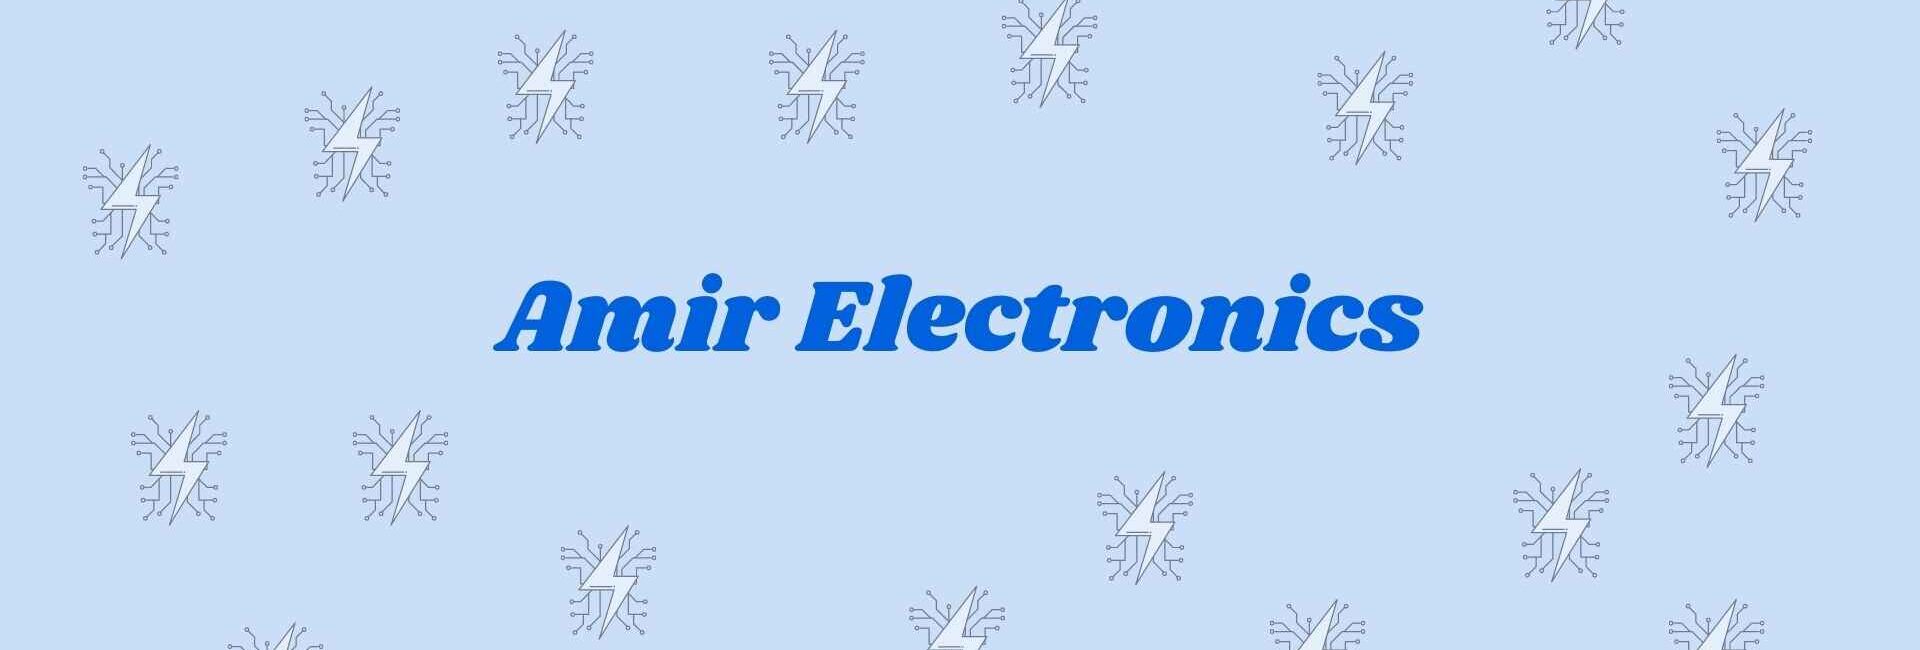 Amir Electronics - Electronics Goods Dealer in Noida